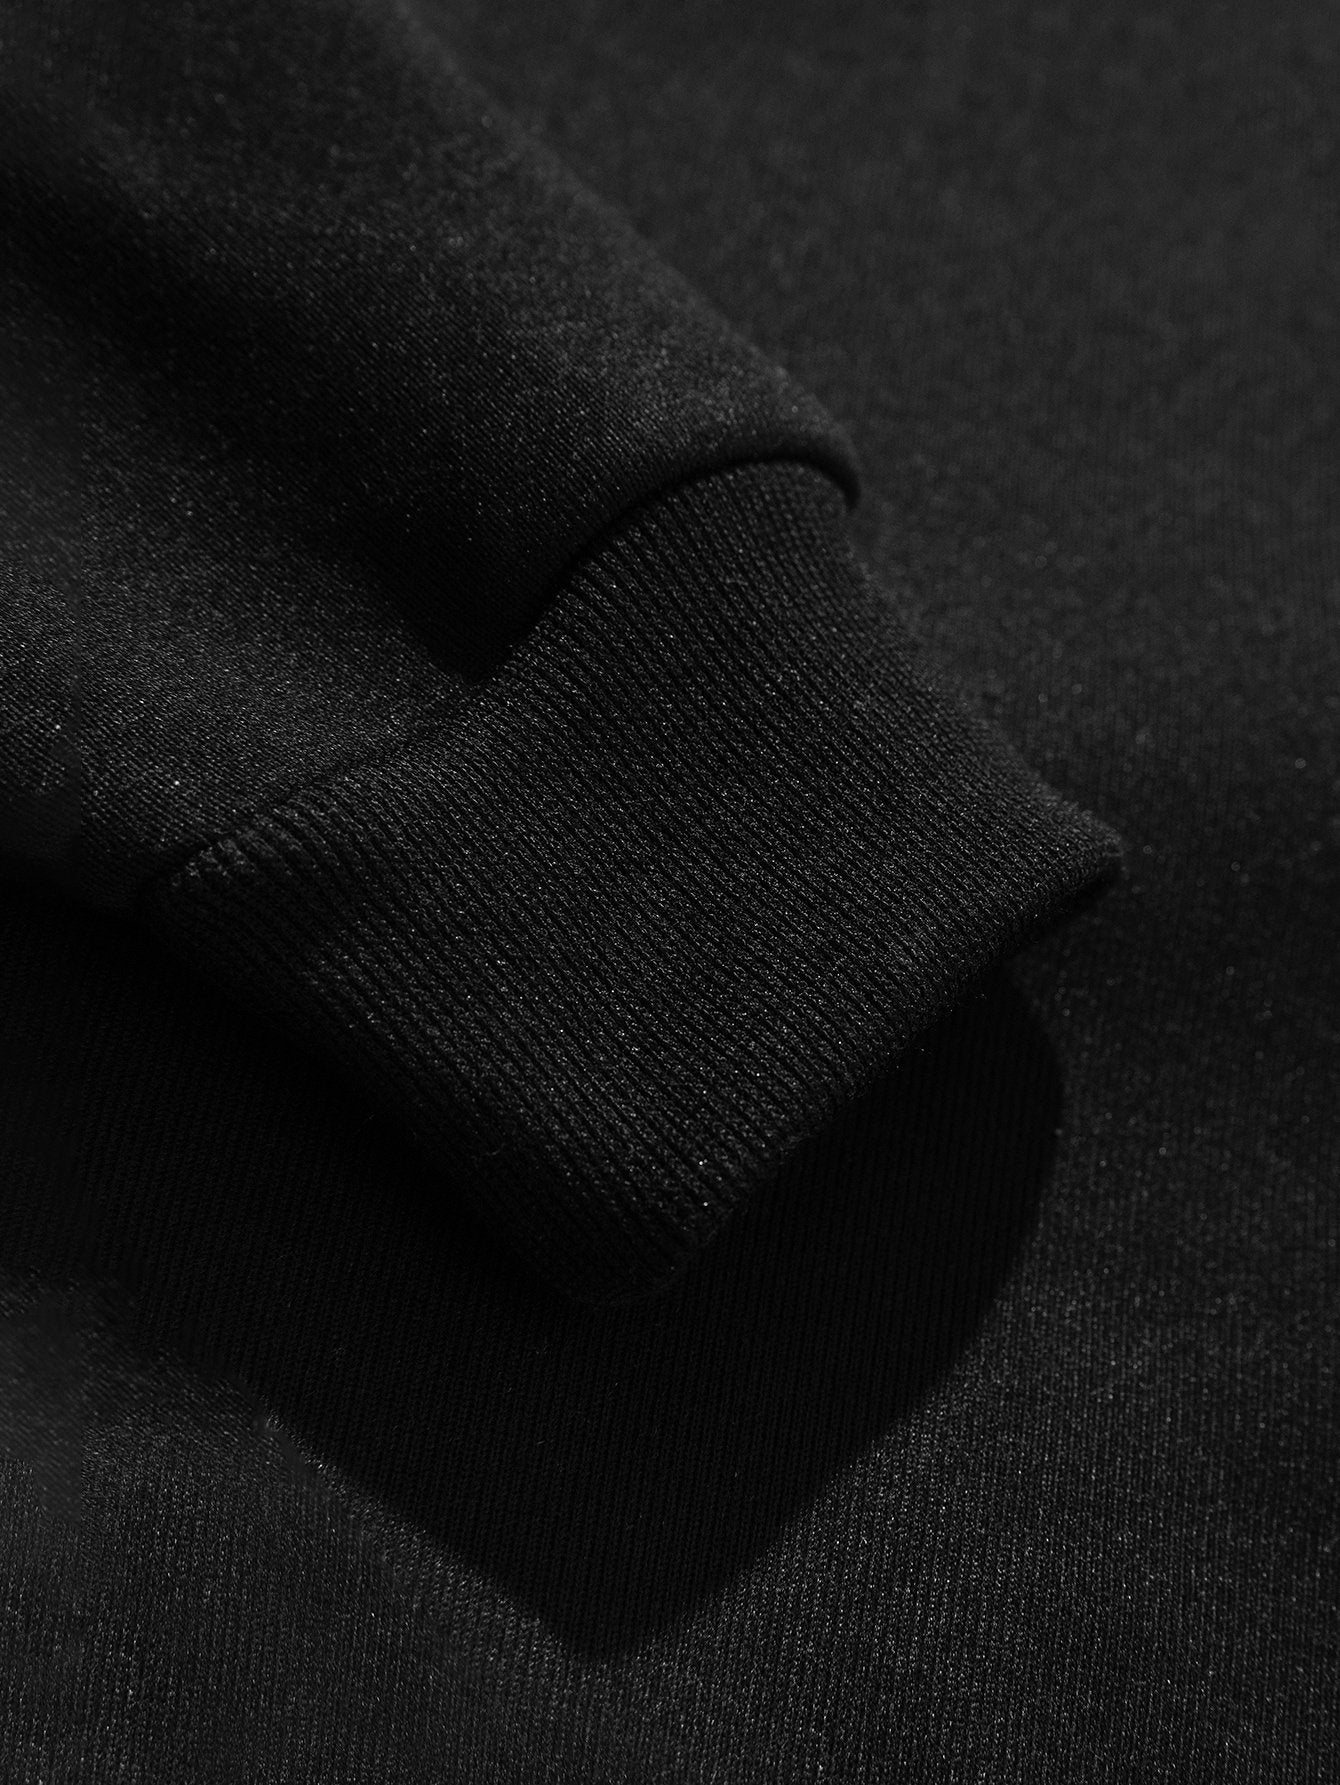 Hoodies - Solid Drop Shoulder Sweatshirt - MsDressly